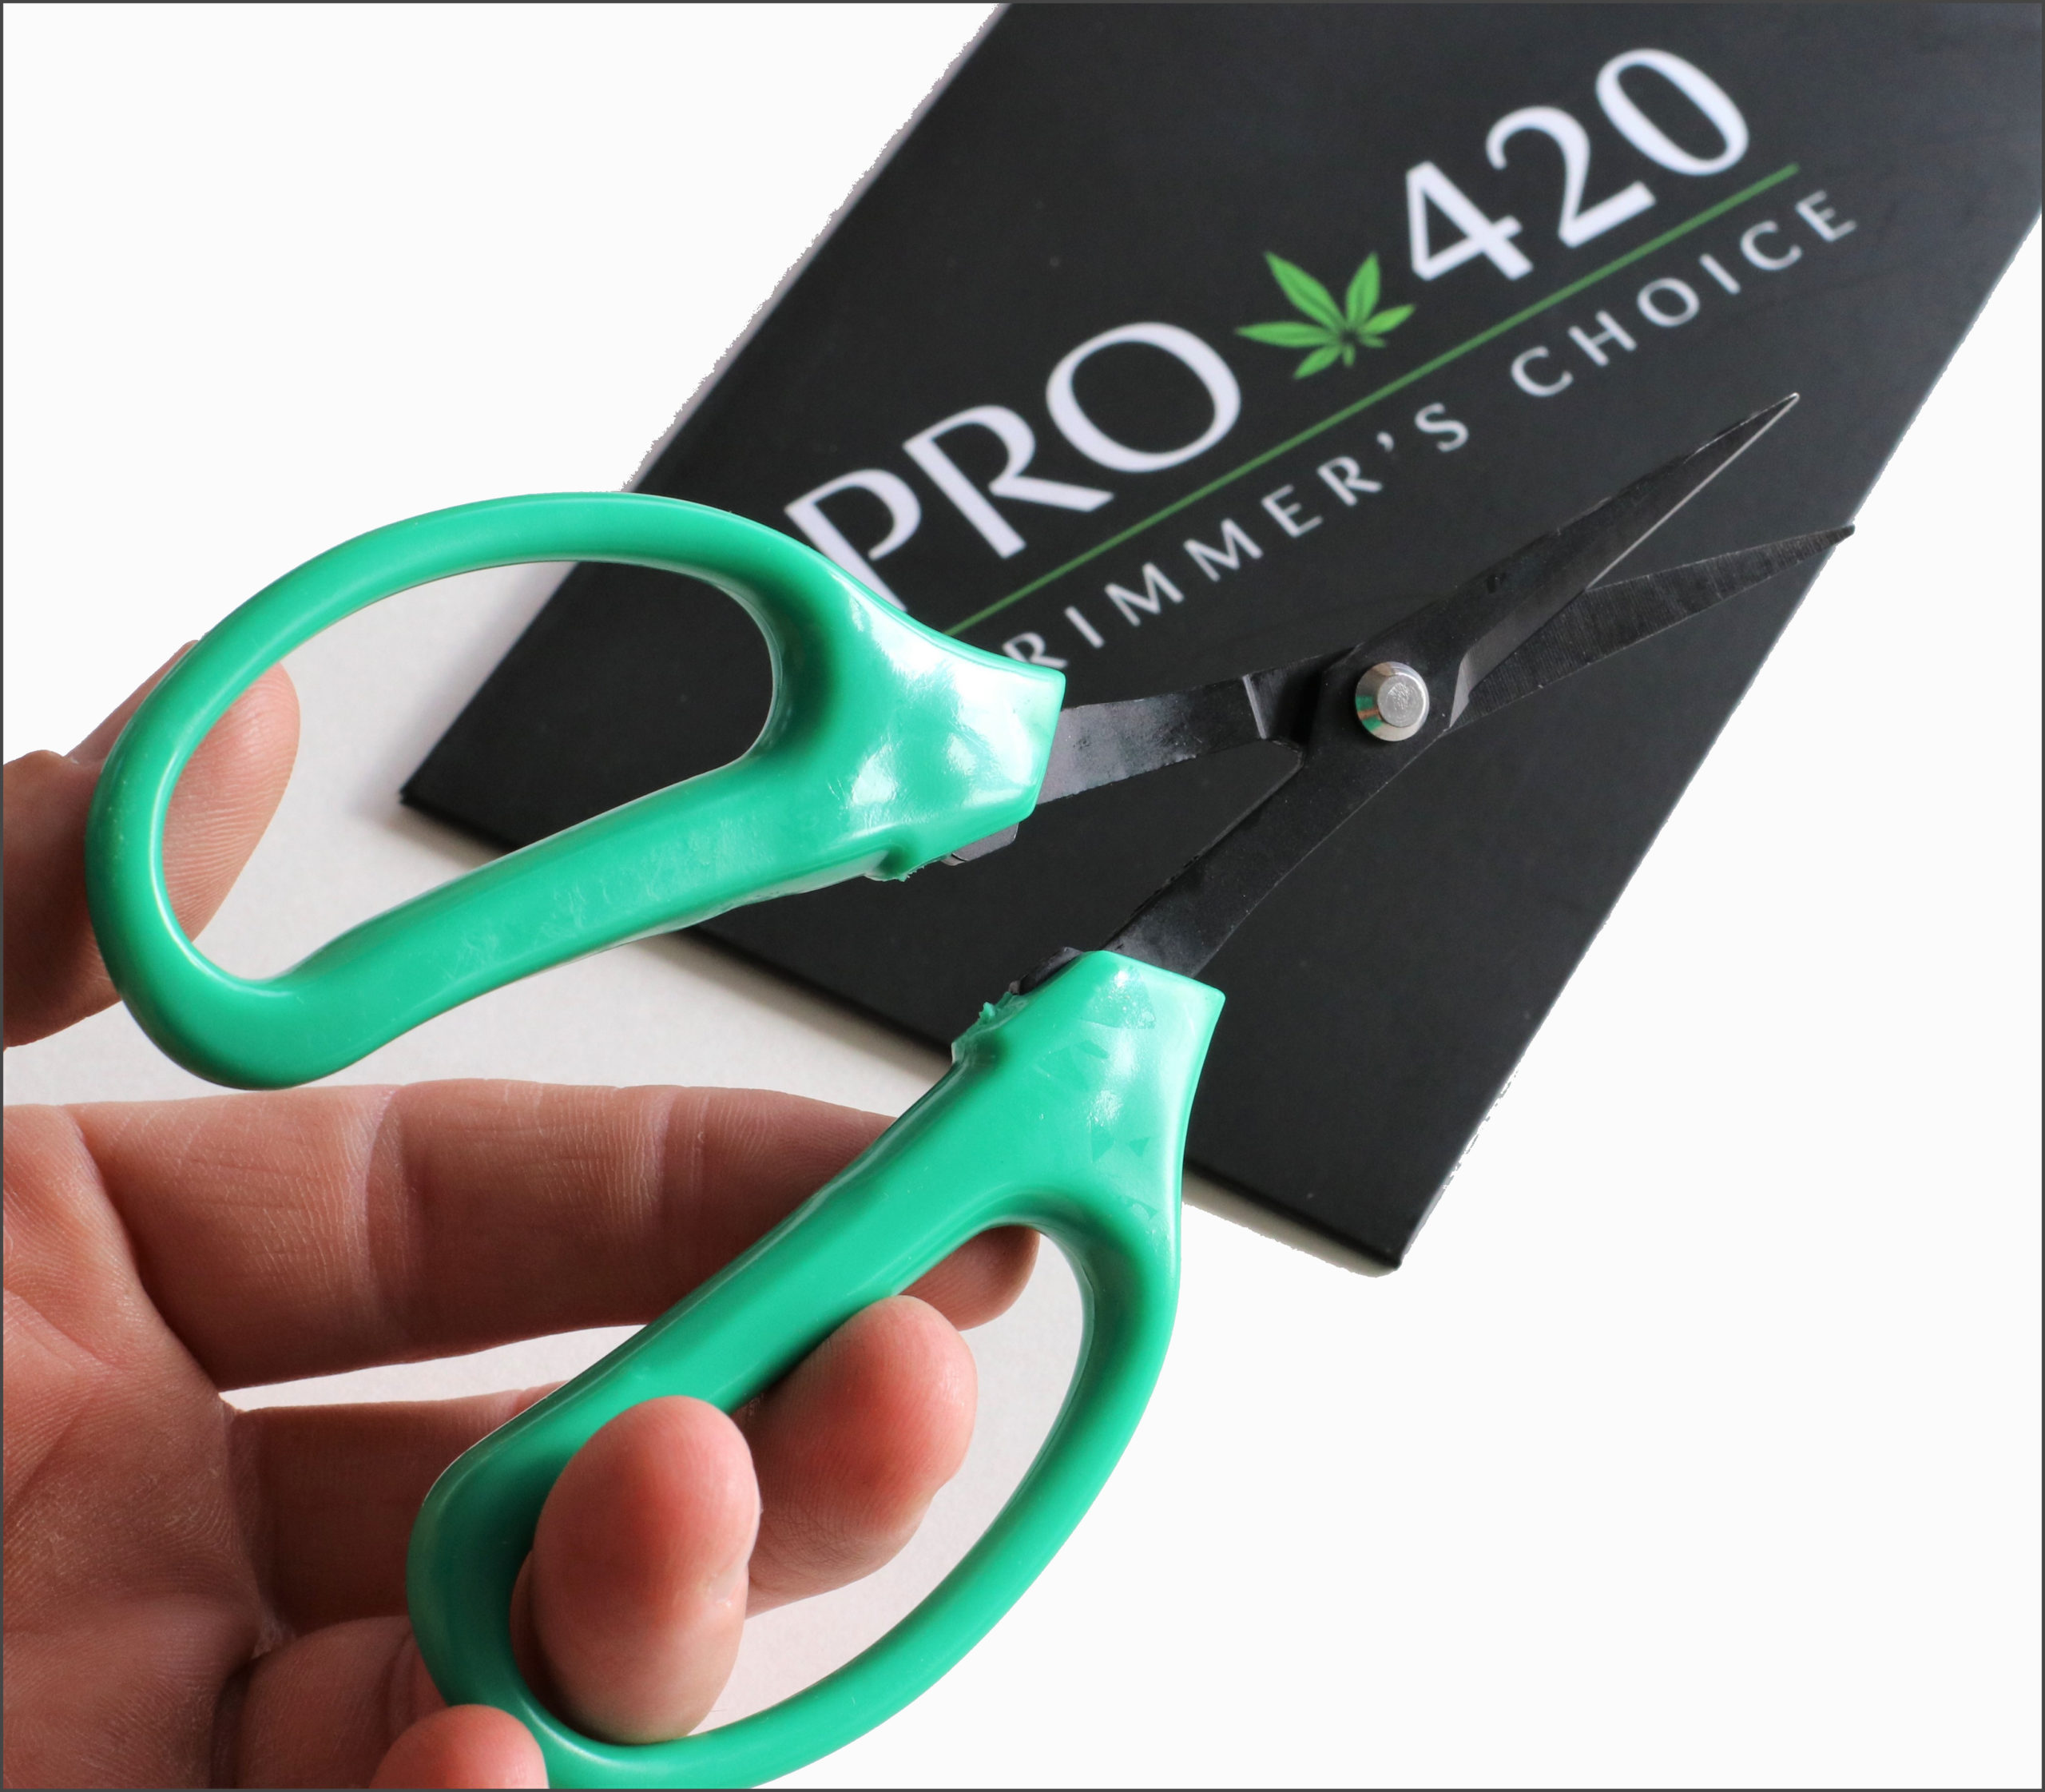 PRO 420 Classic Silver ScissorsPRO 420 - PRO 420 Scissors